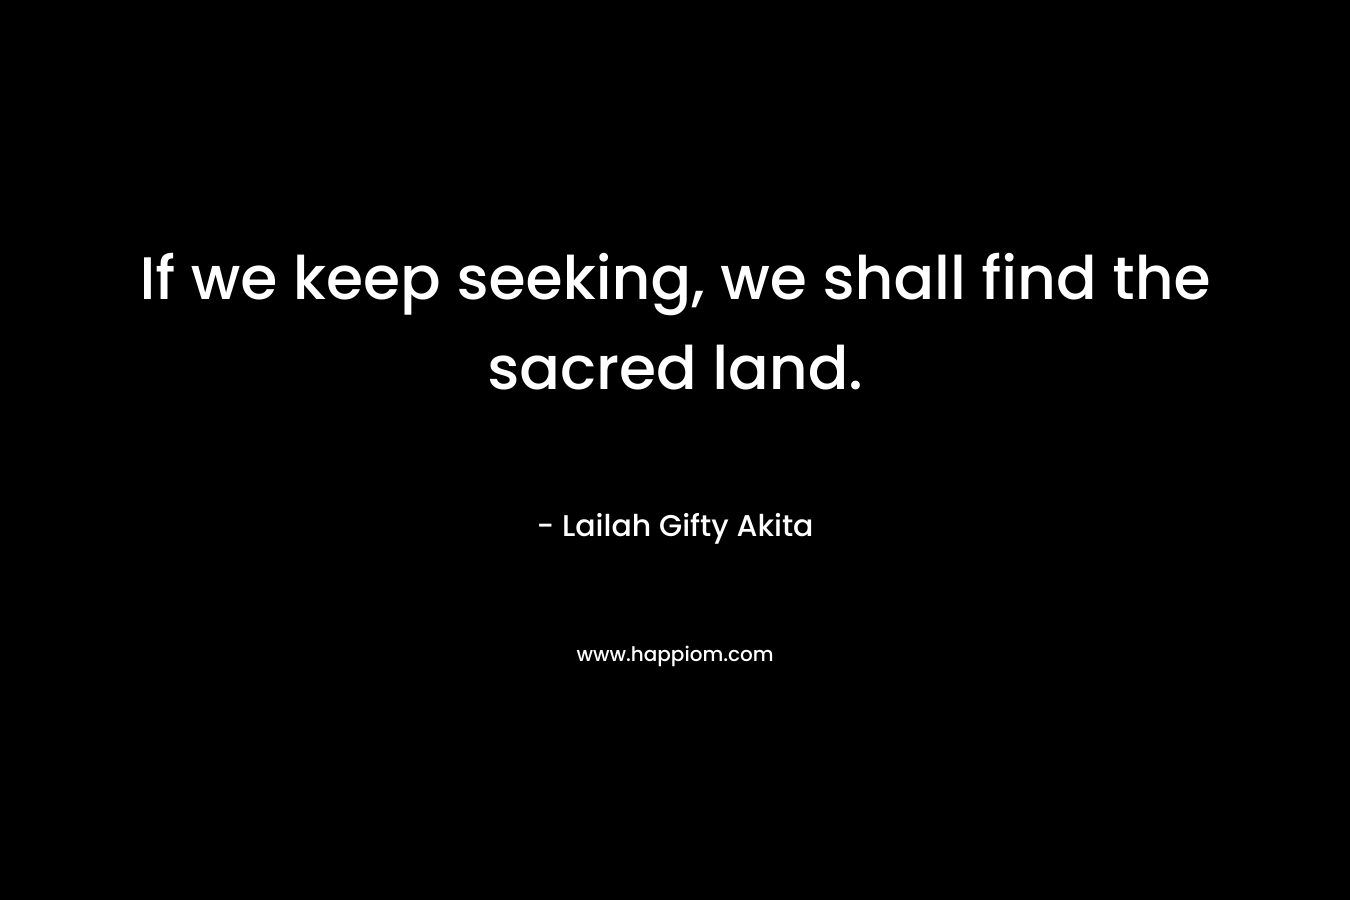 If we keep seeking, we shall find the sacred land.